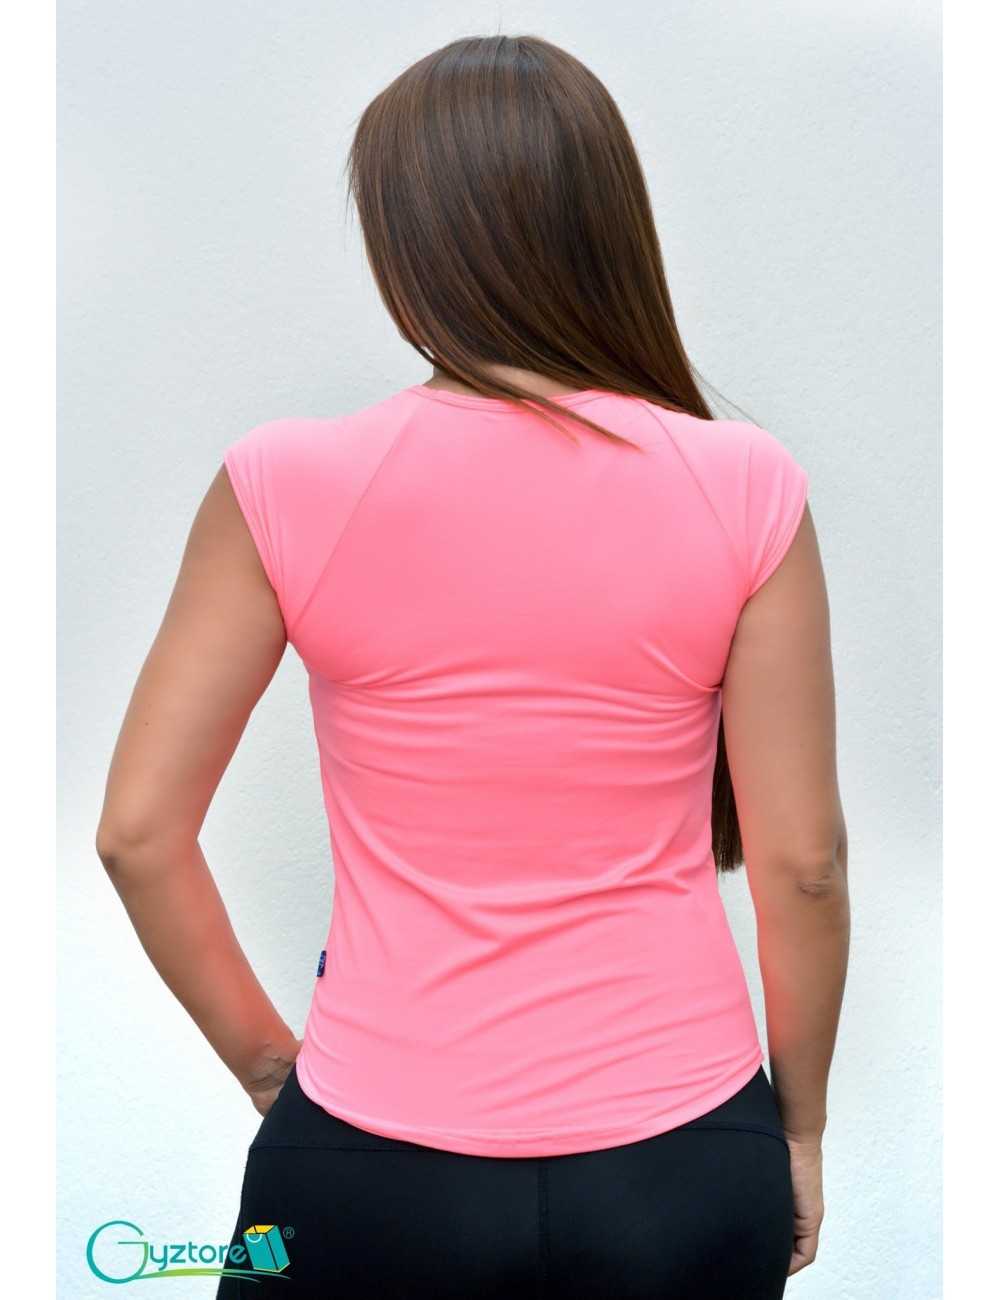 Blusa deportiva manga corta color rosado